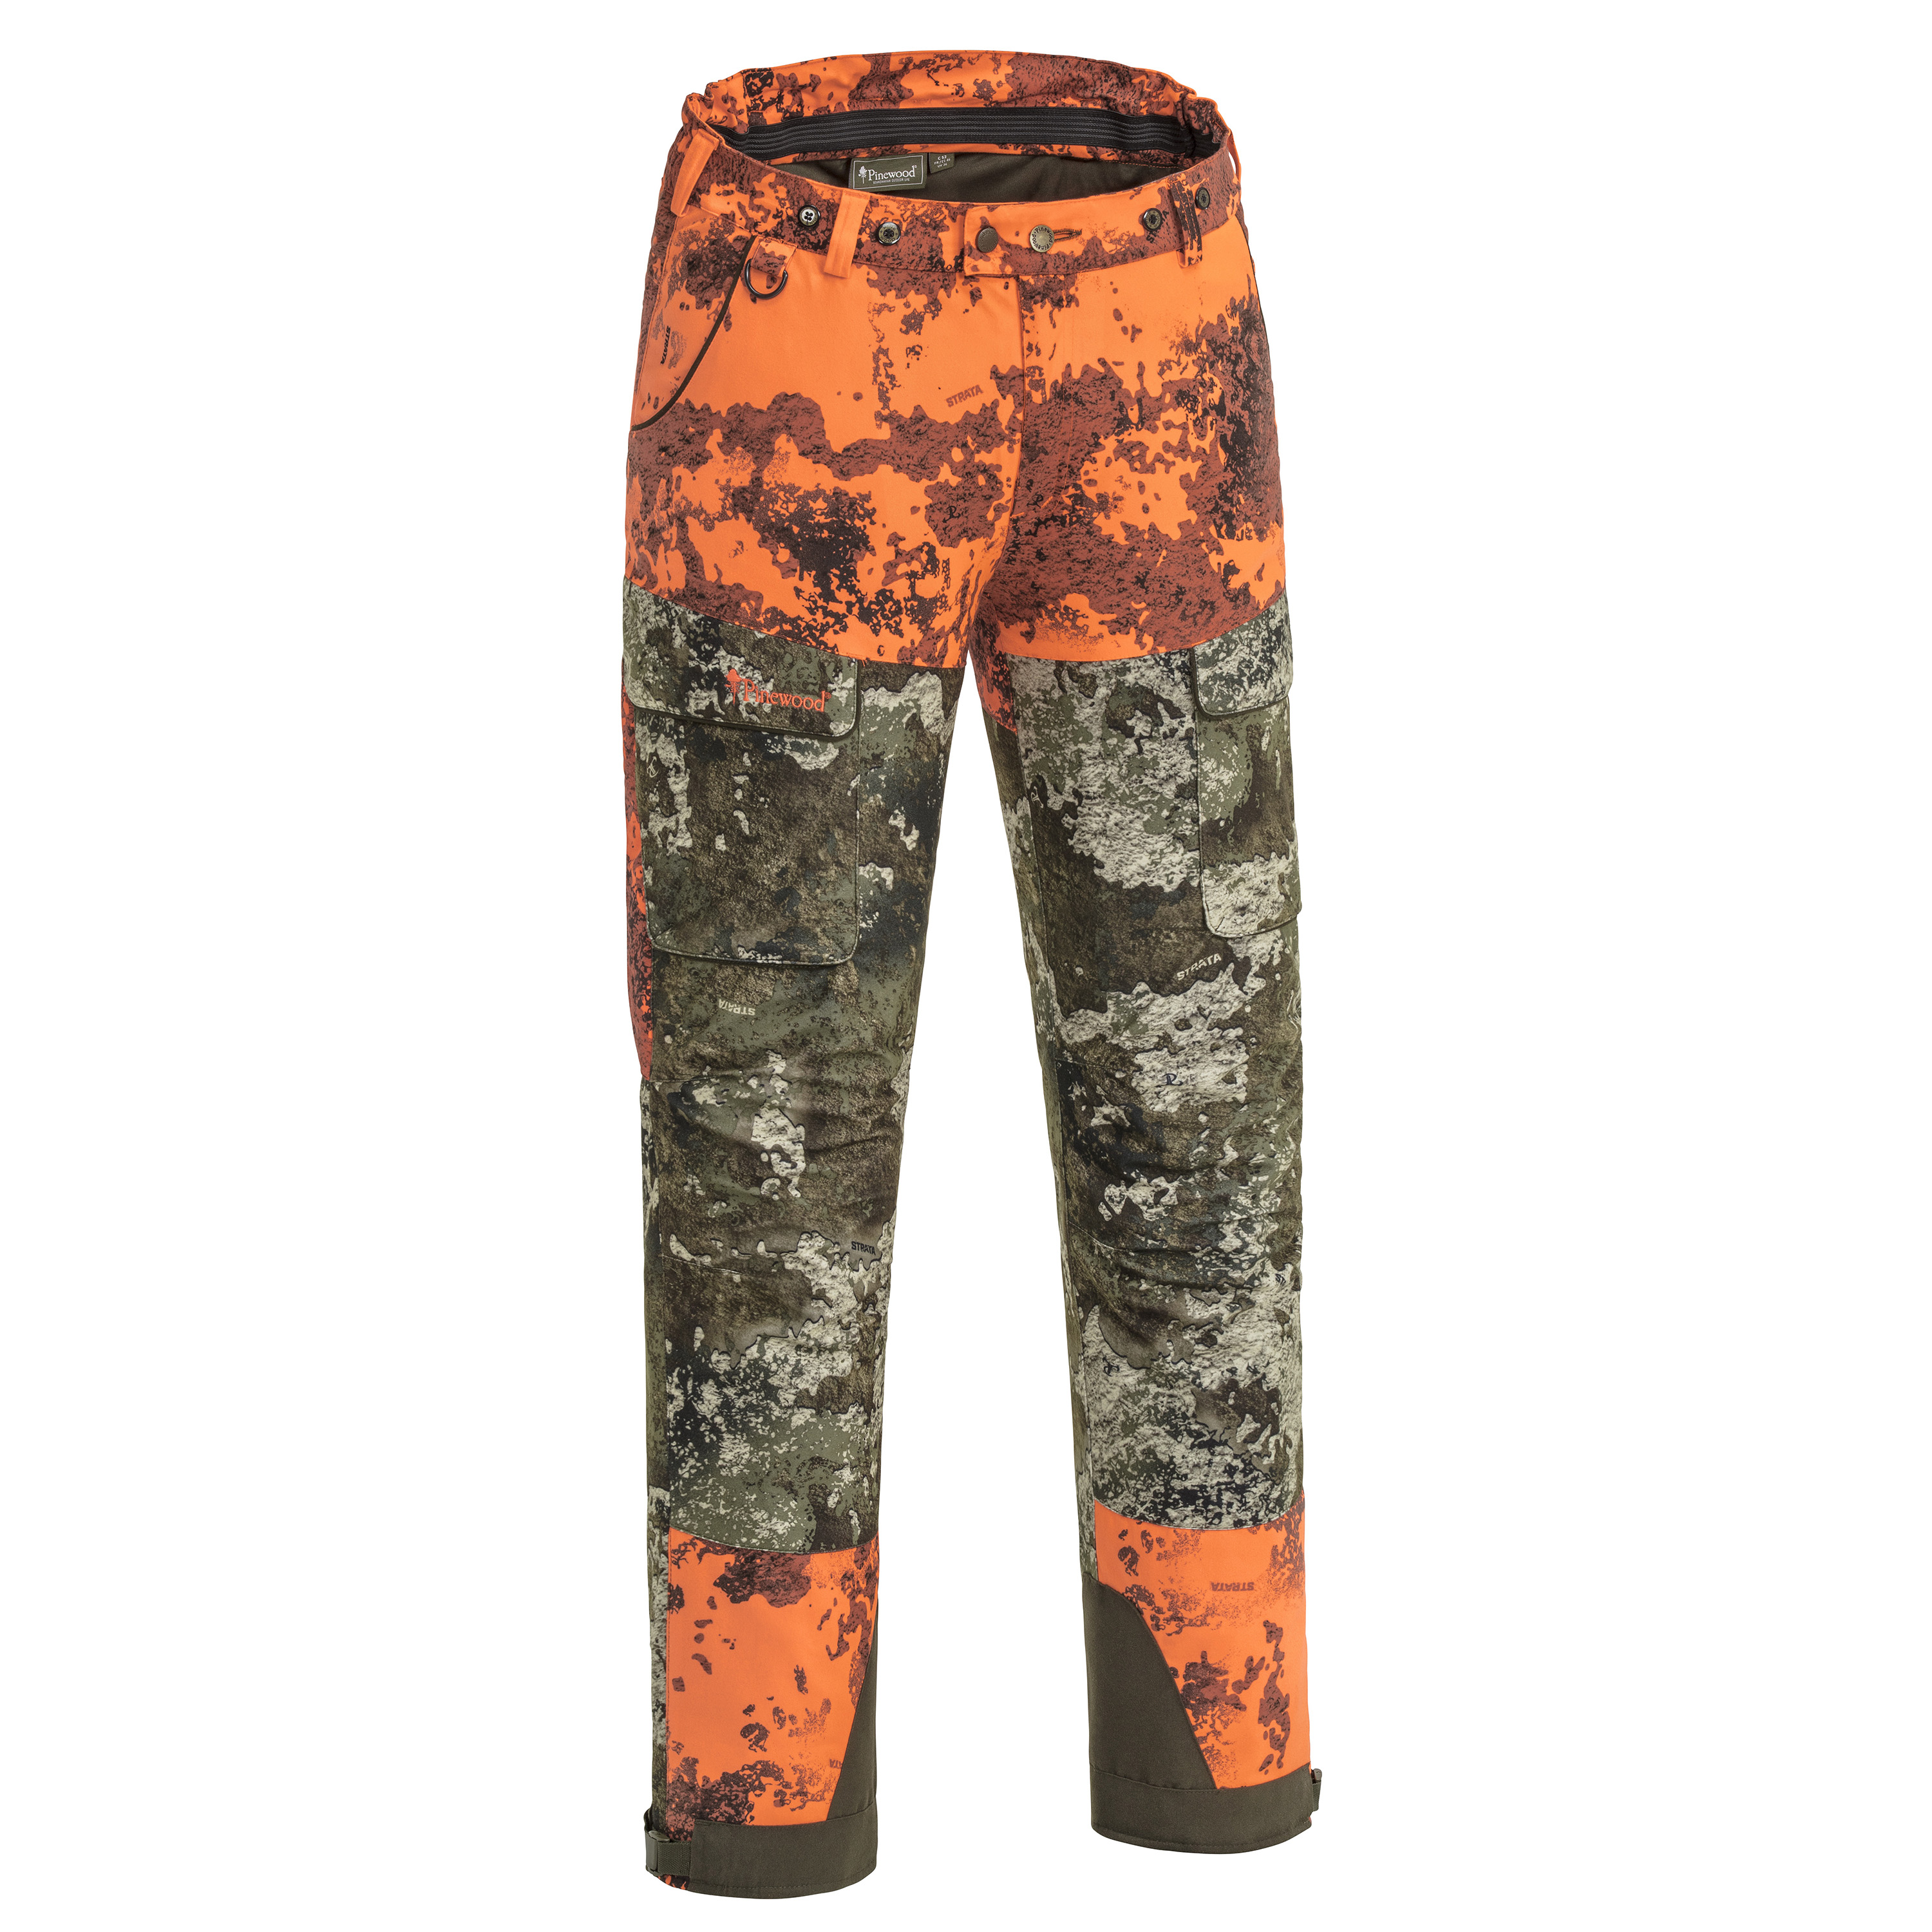 Camouflage joggers pants Men Streetwear Cargo Pants Hip Hop Trousers  Overalls | eBay